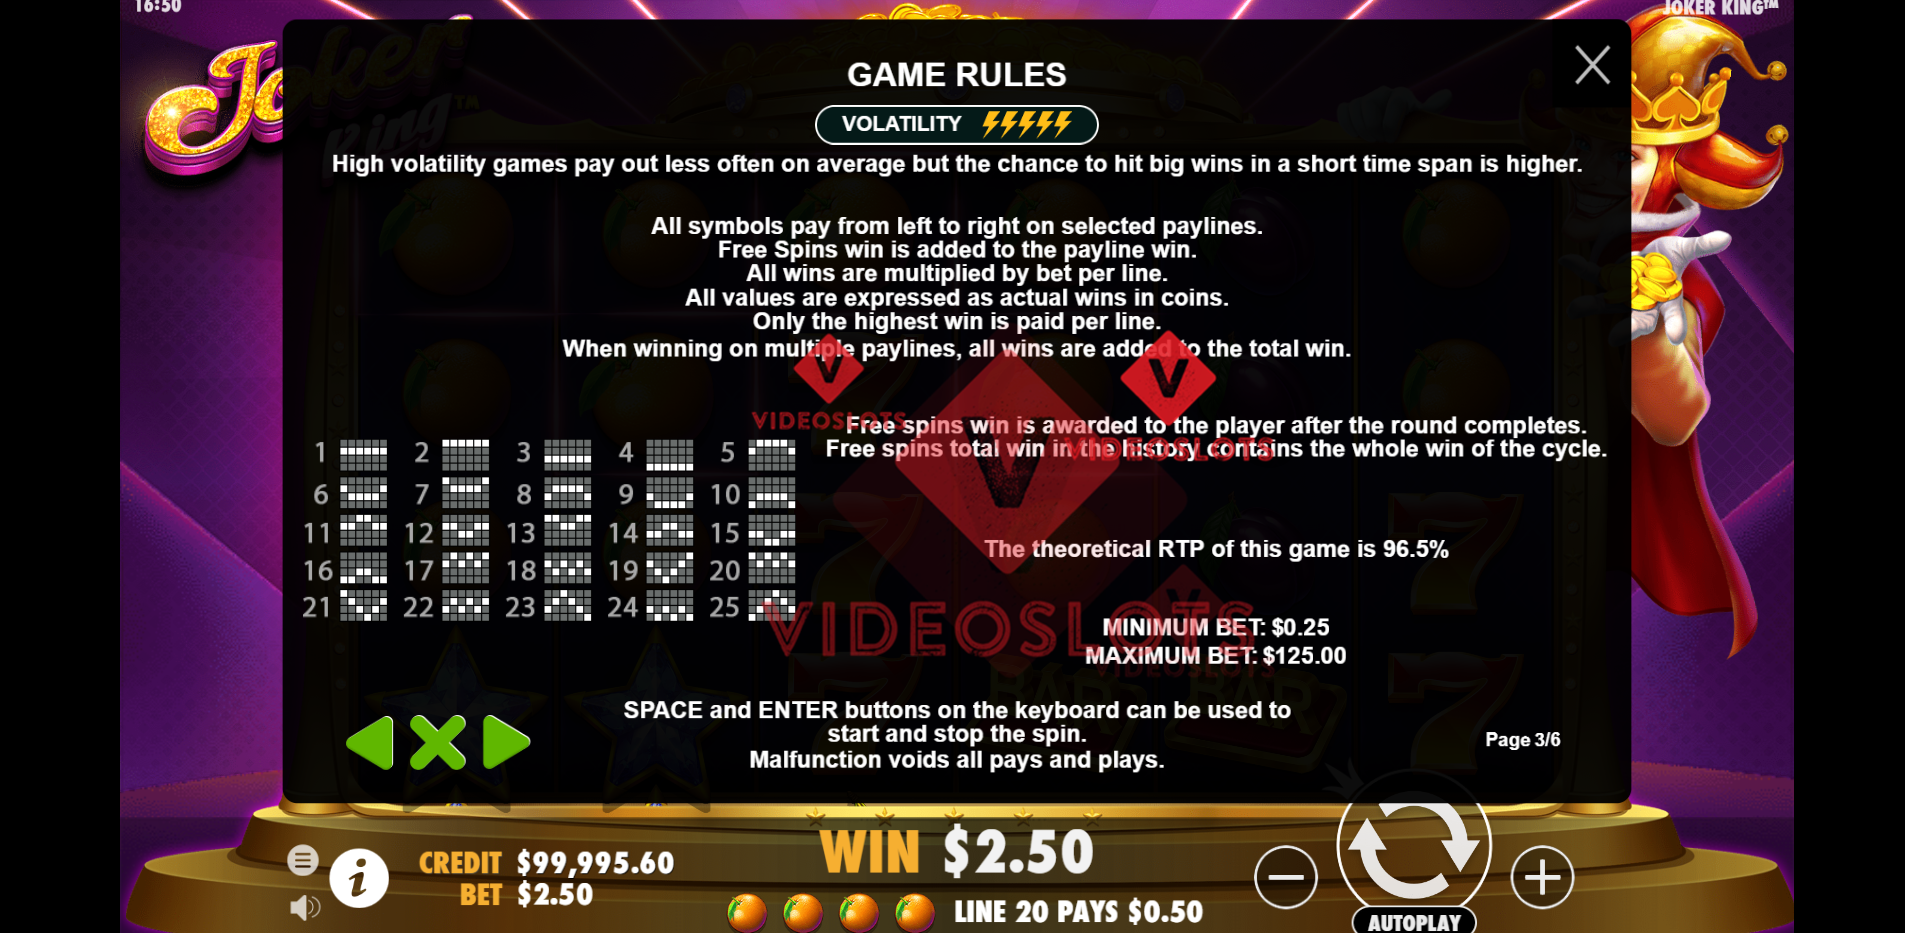 Game Rules for Joker King slot by Pragmatic Play